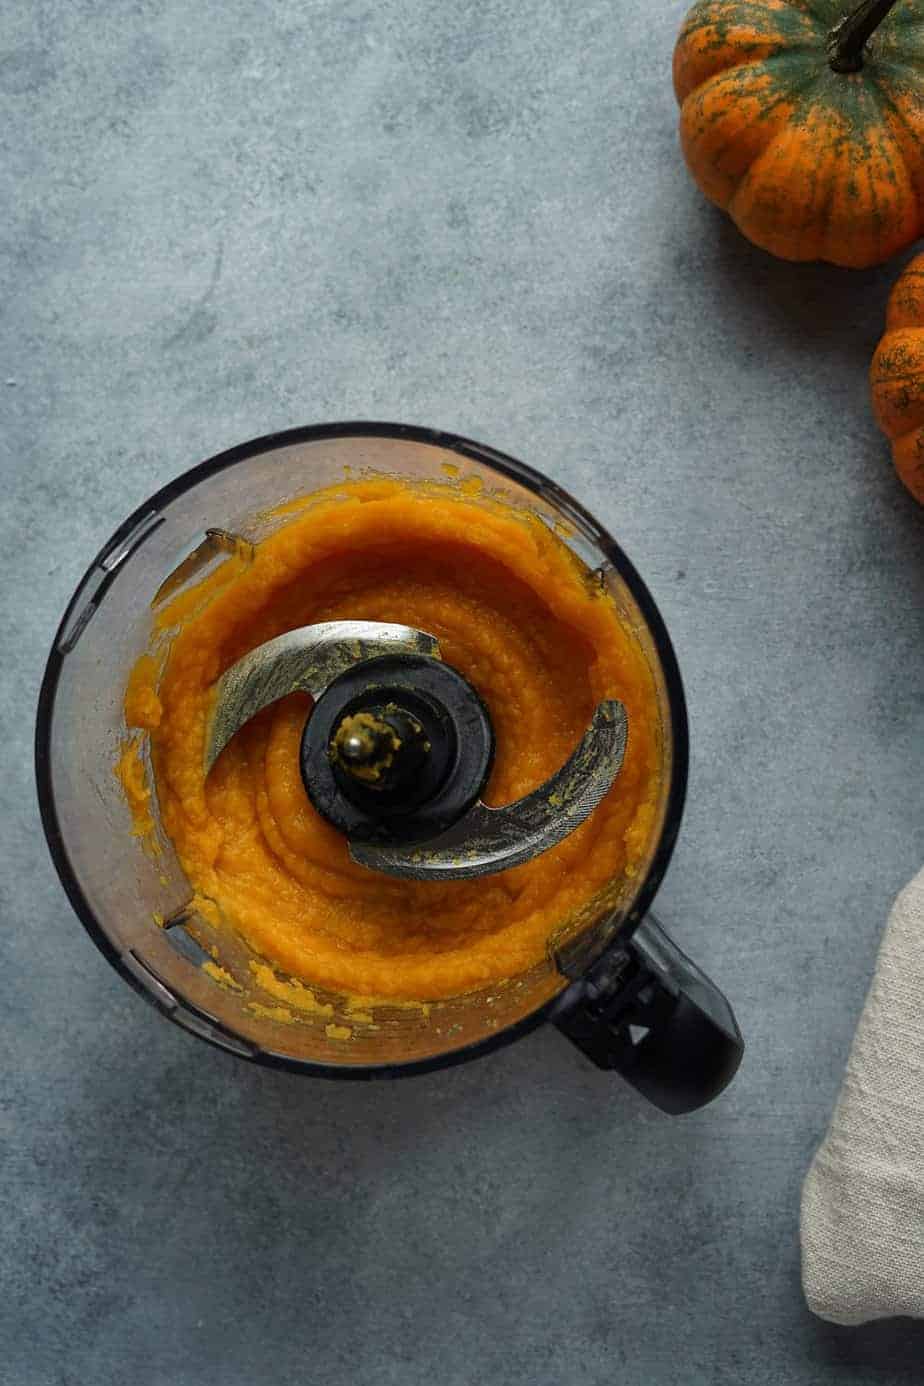 Blend the pumpkin pulp in a food processor.